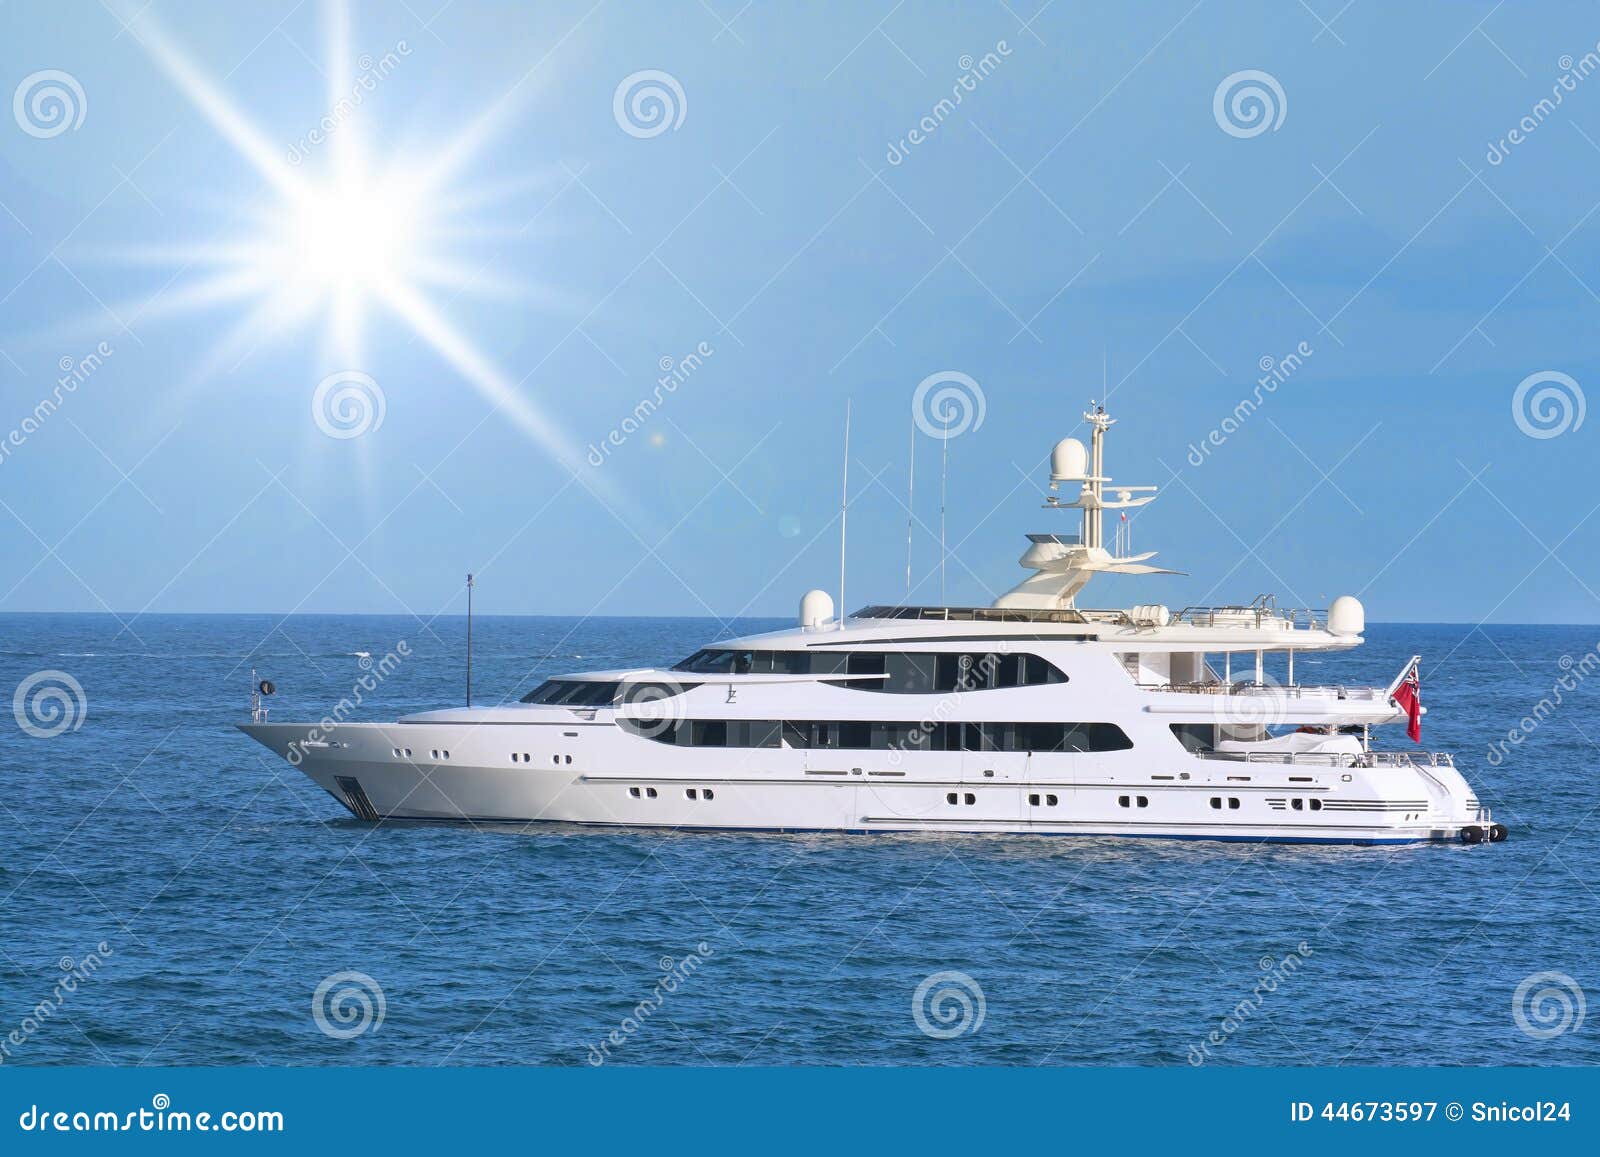 luxury boat yacht